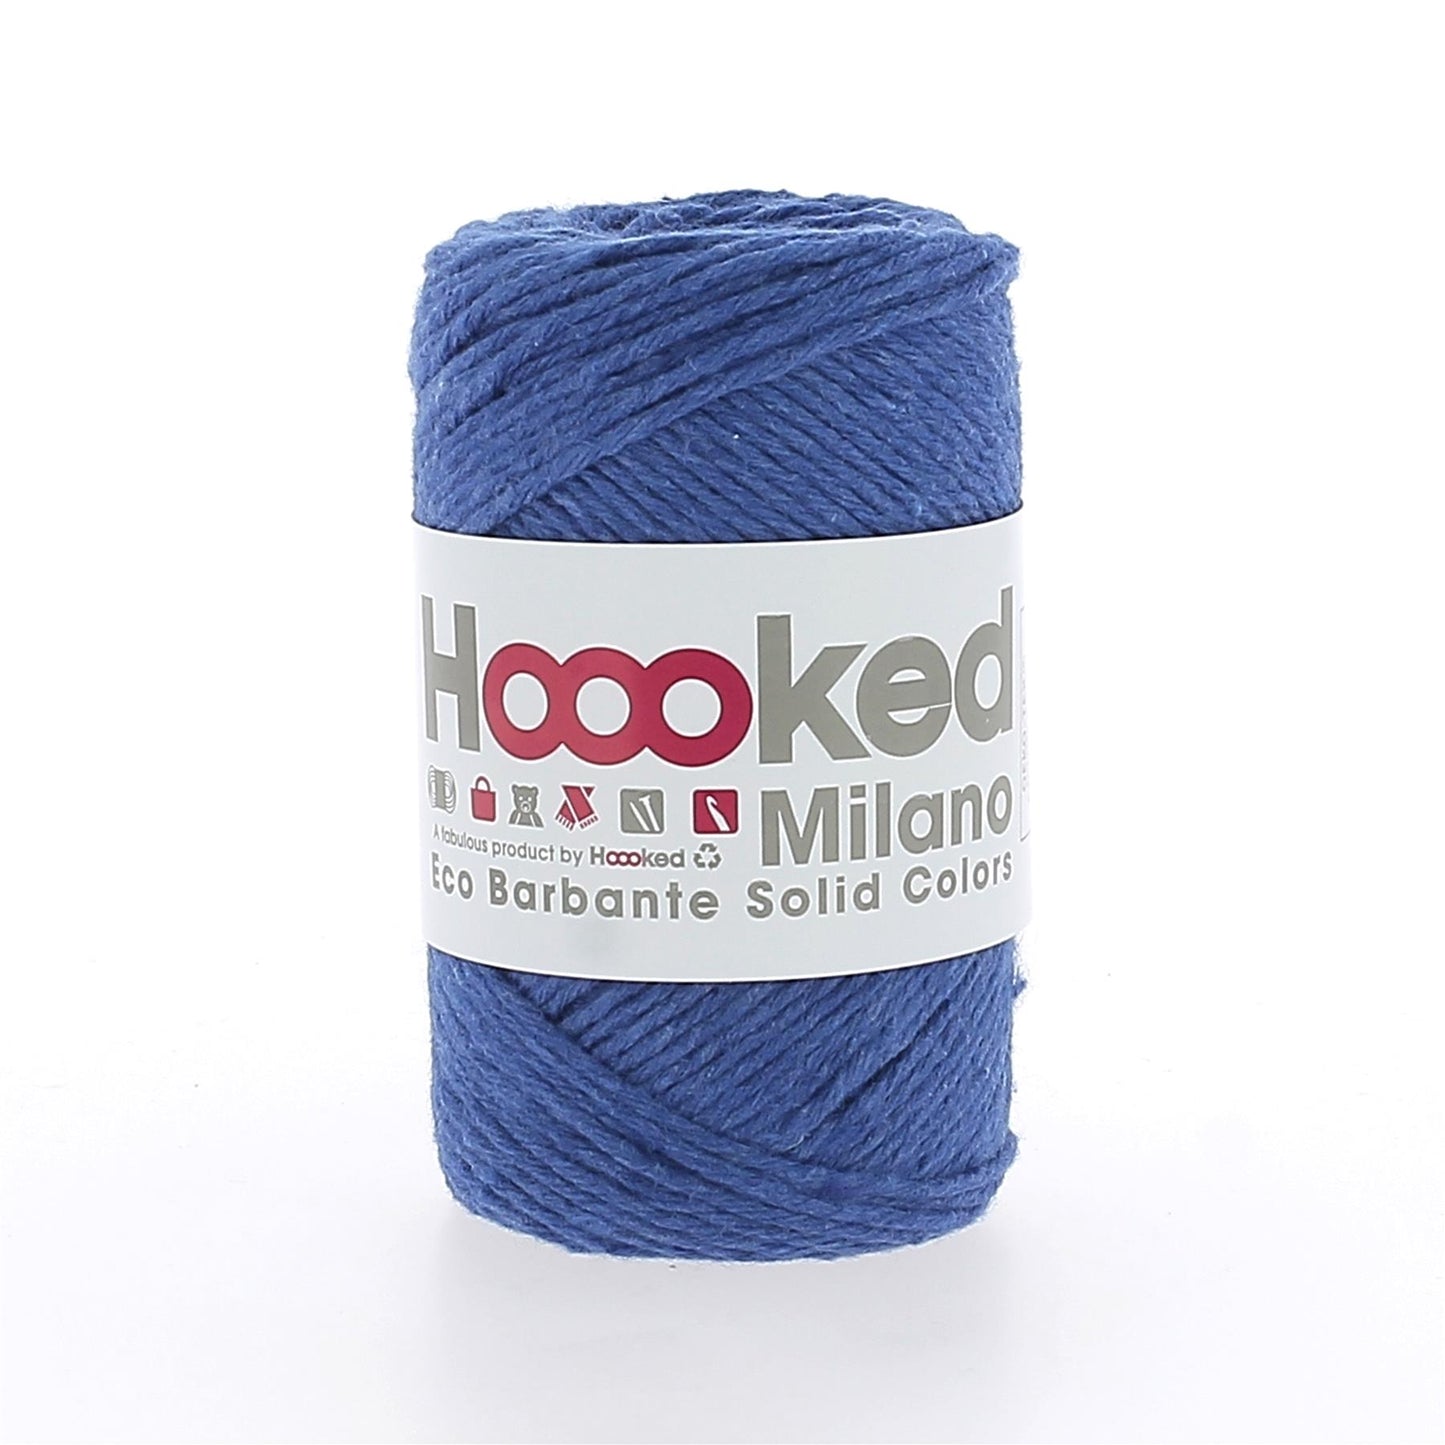 [Hoooked] D903 Eco Barbante Milano Ultramarine Cotton Yarn - 102M, 100g